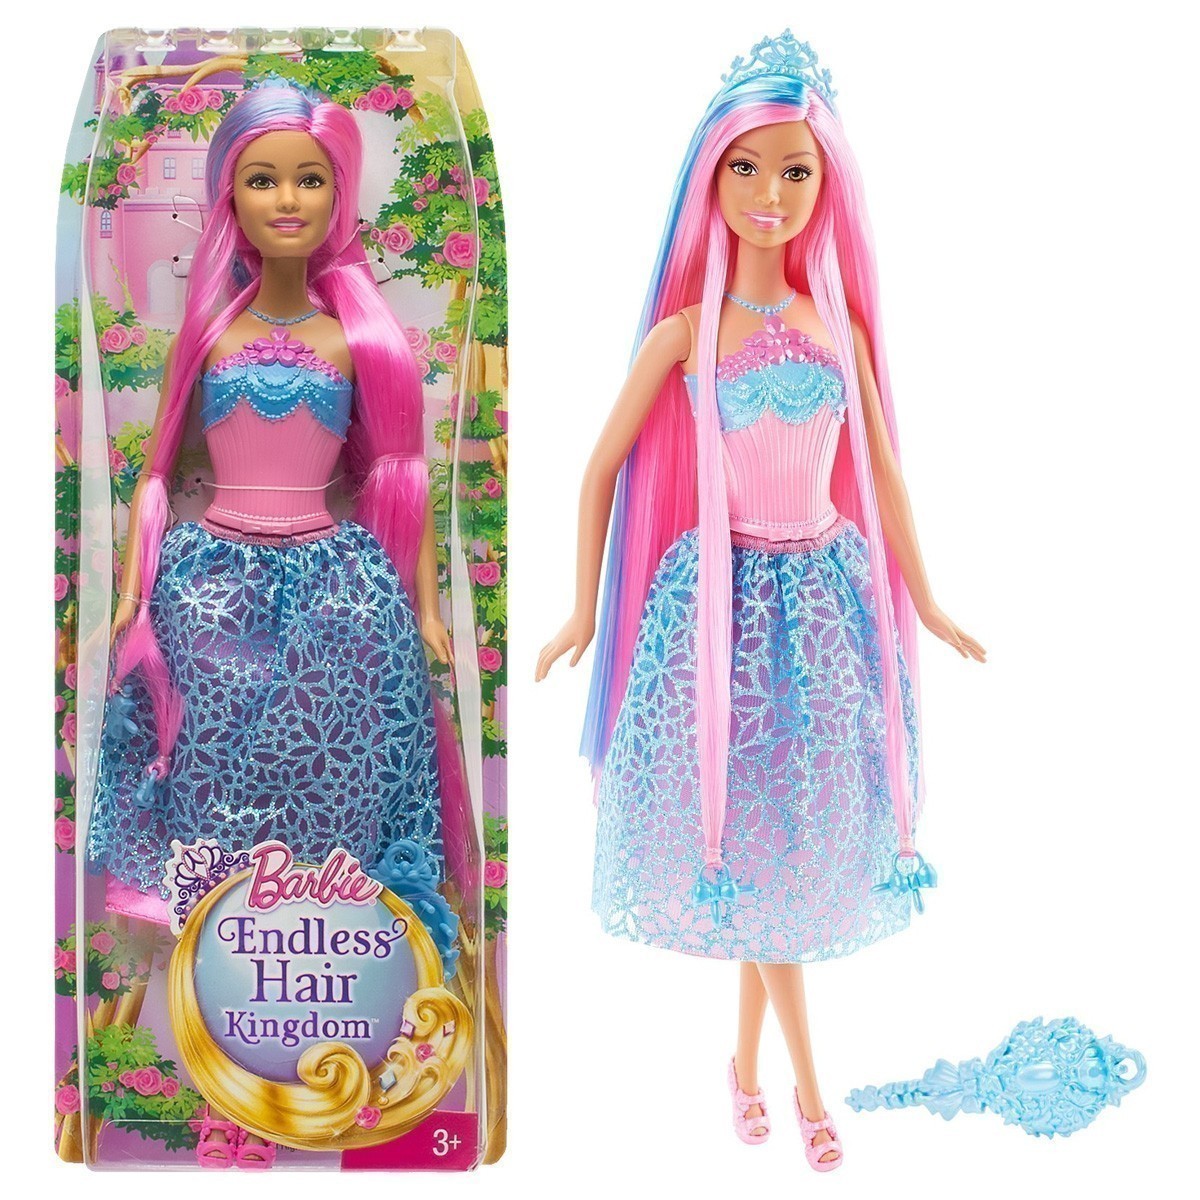 Barbie - Endless Hair Kingdom - PinkPrincess Doll